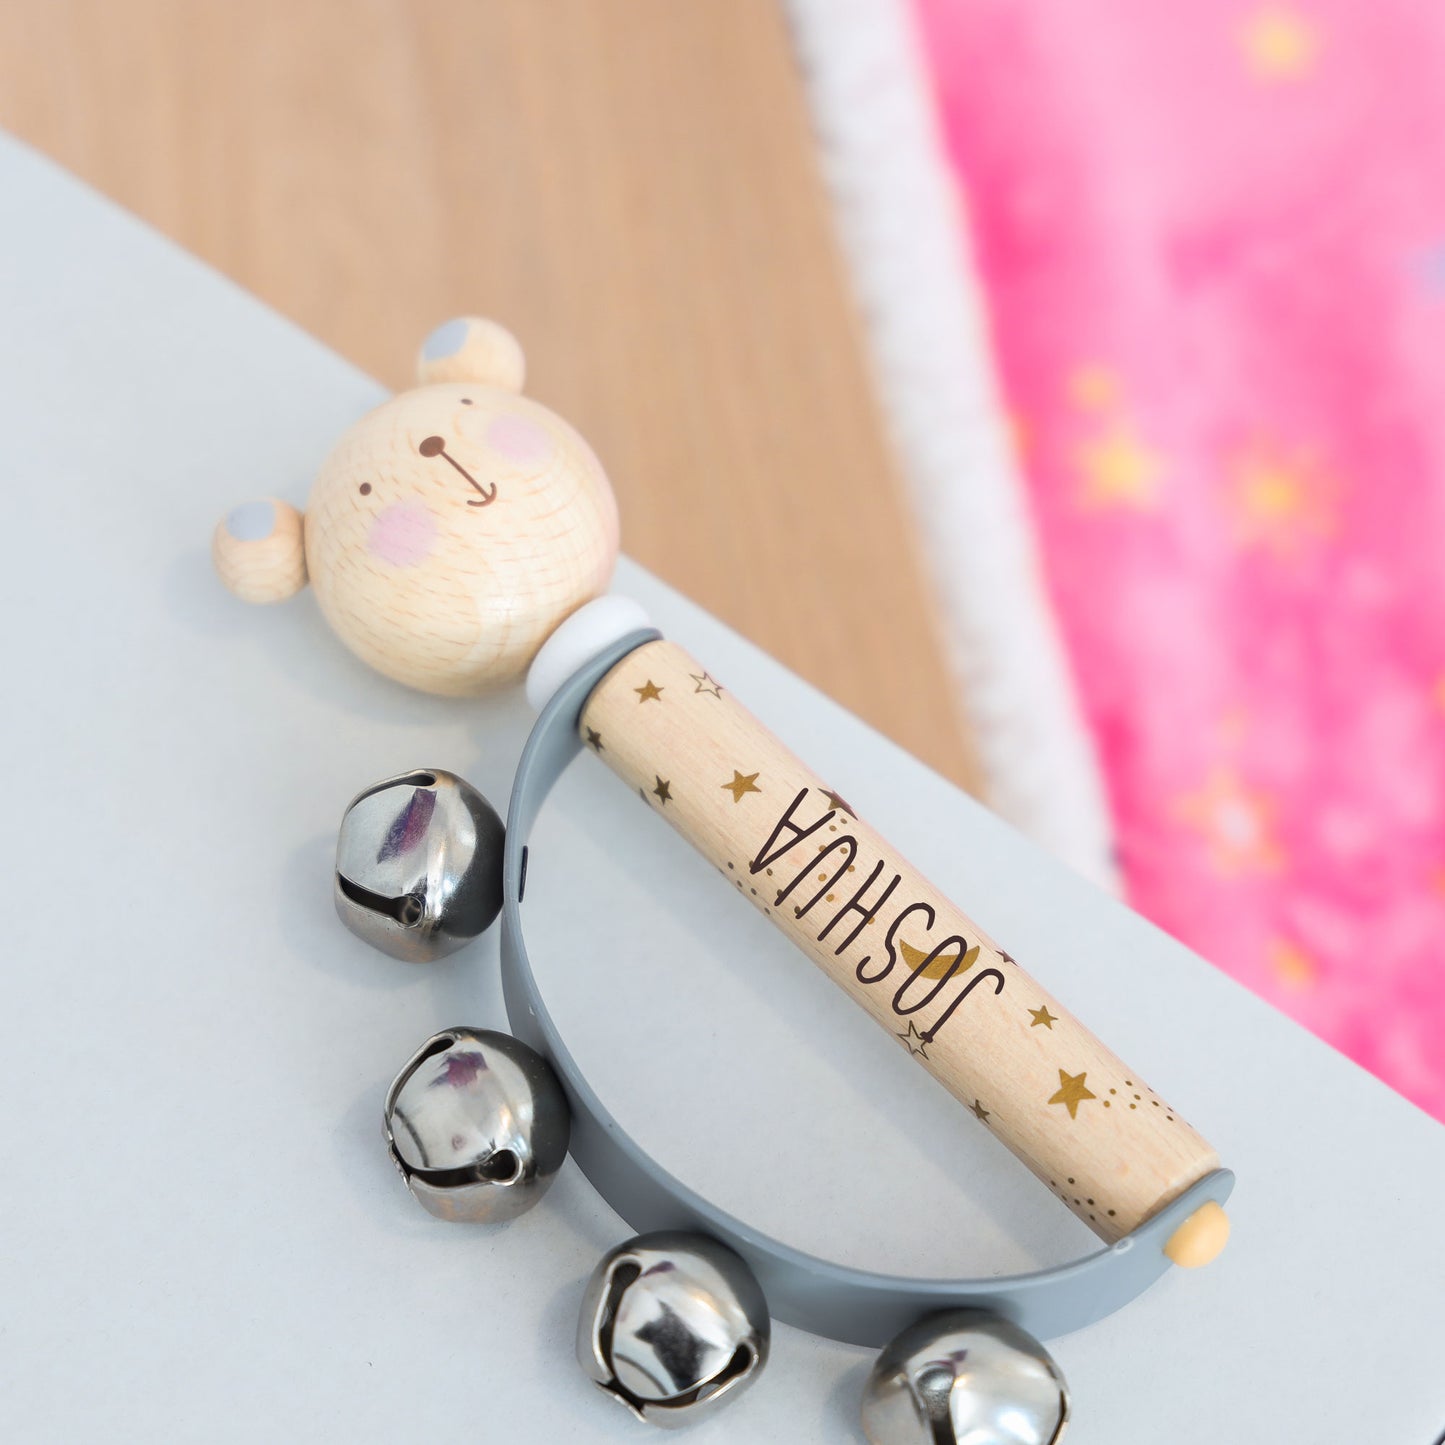 Personalised Engraved Wooden Baby Hand Bells Toy  - Always Looking Good -   